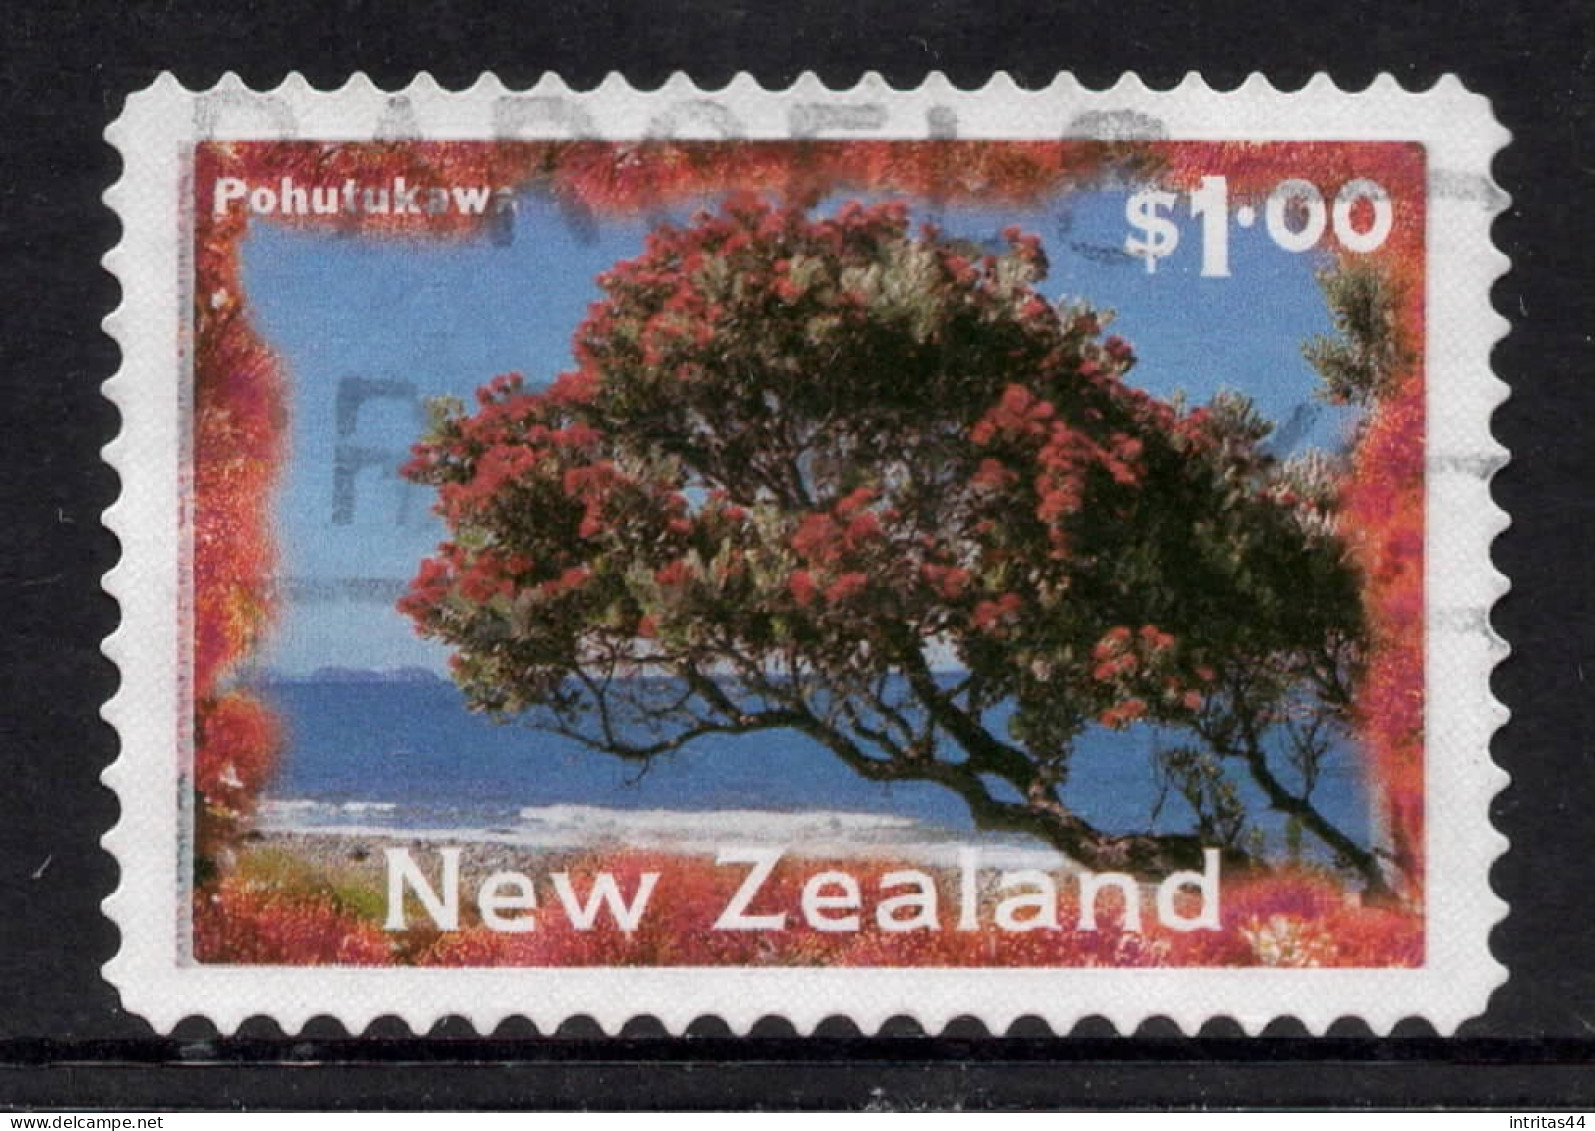 NEW ZEALAND 1996 AIRPOST  $1.00 " POHUTUKAWA " SA.  STAMP VFU - Oblitérés